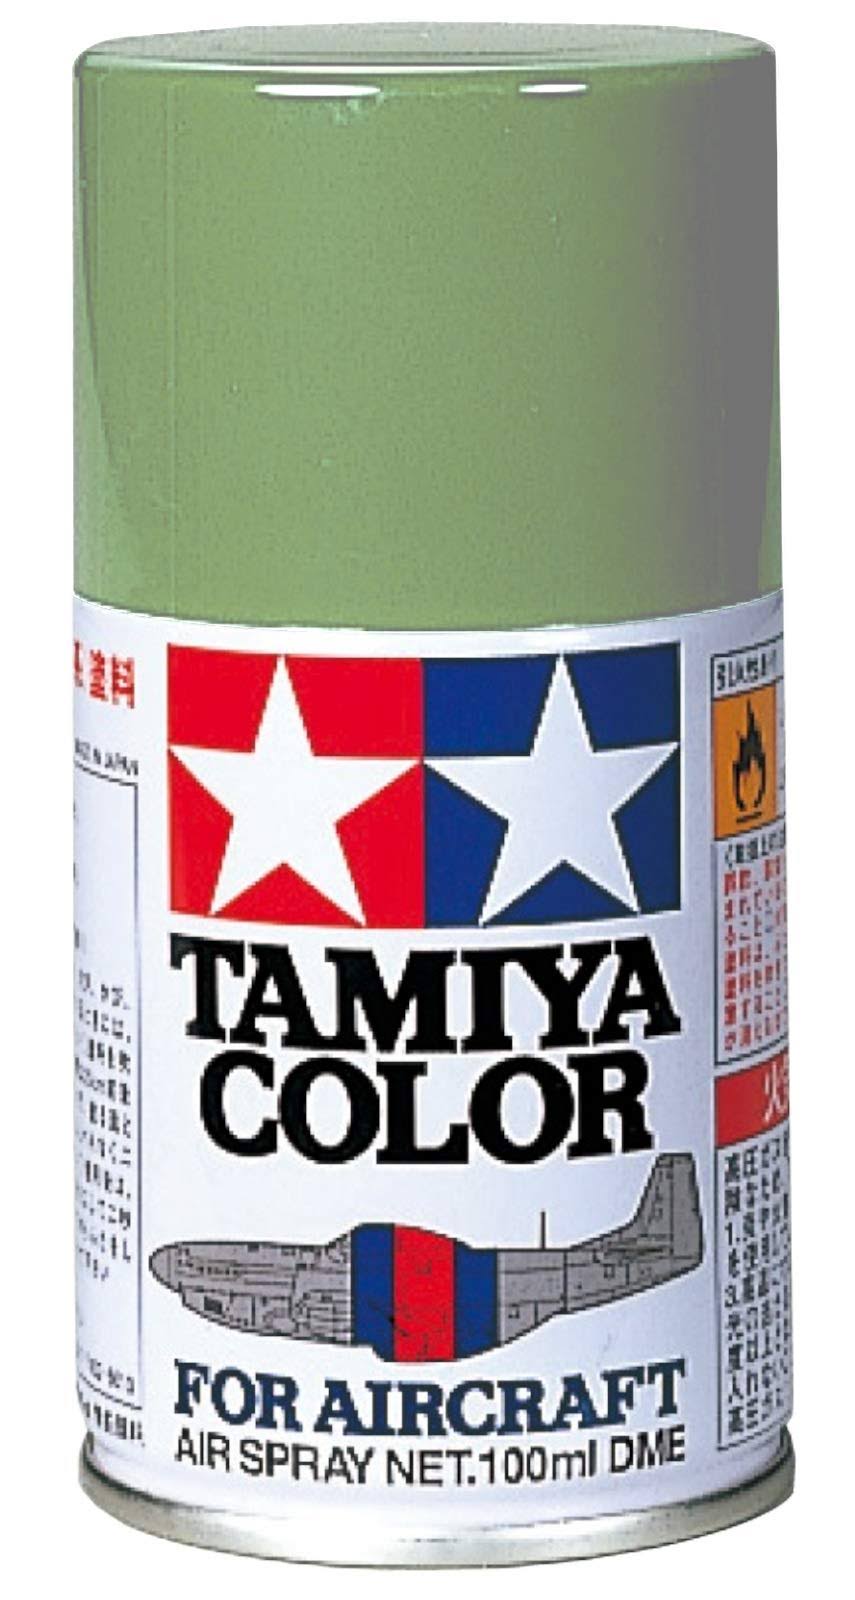 Tamiya Spray Paint - Gray Green, 100ml